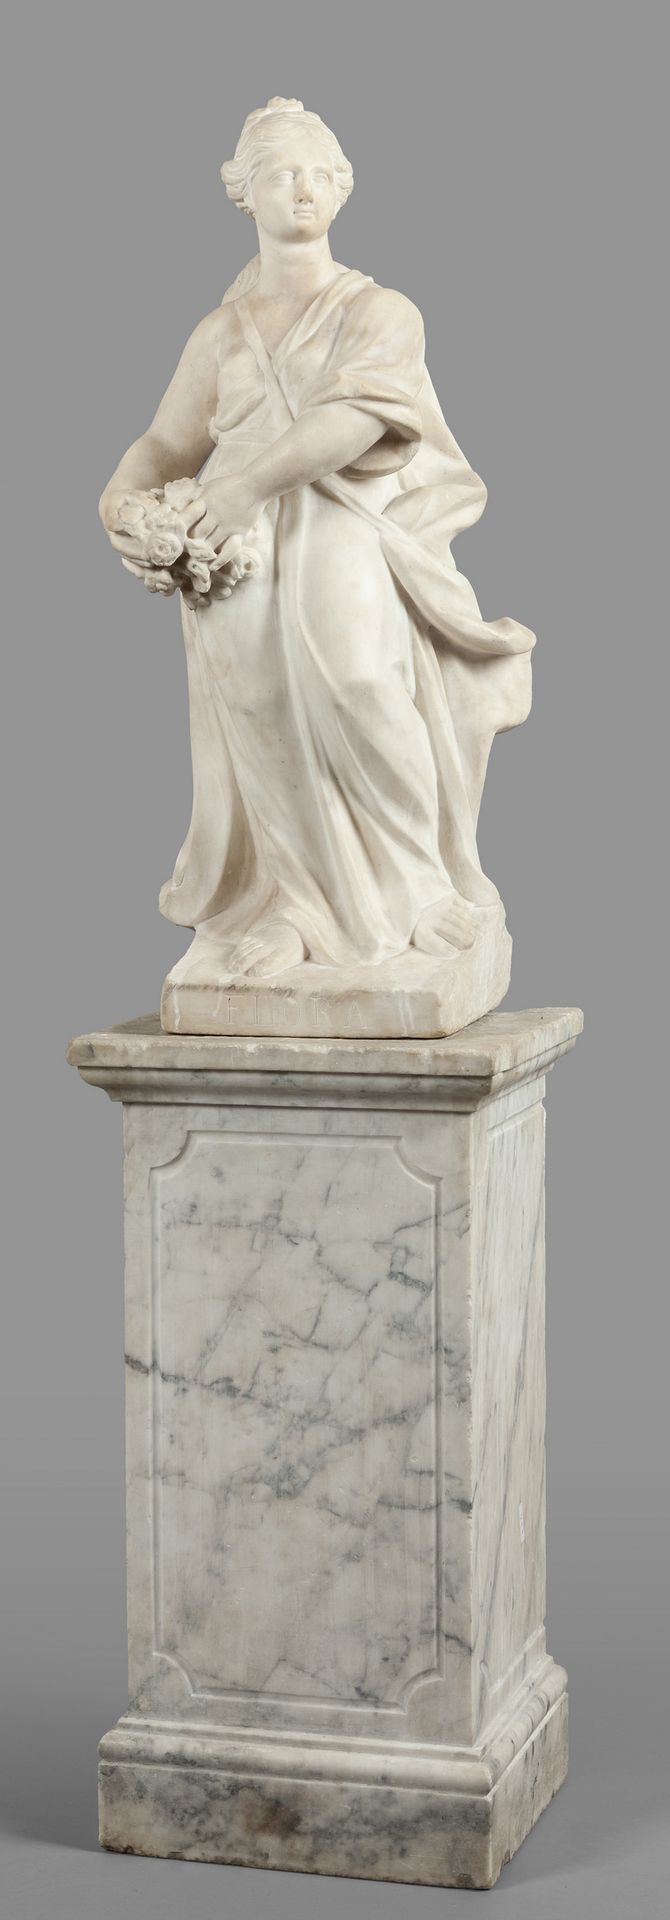 Flora, scultura in marmo con basamento, 弗洛拉，大理石雕塑与底座，18世纪
雕塑高78厘米，底座高65厘米